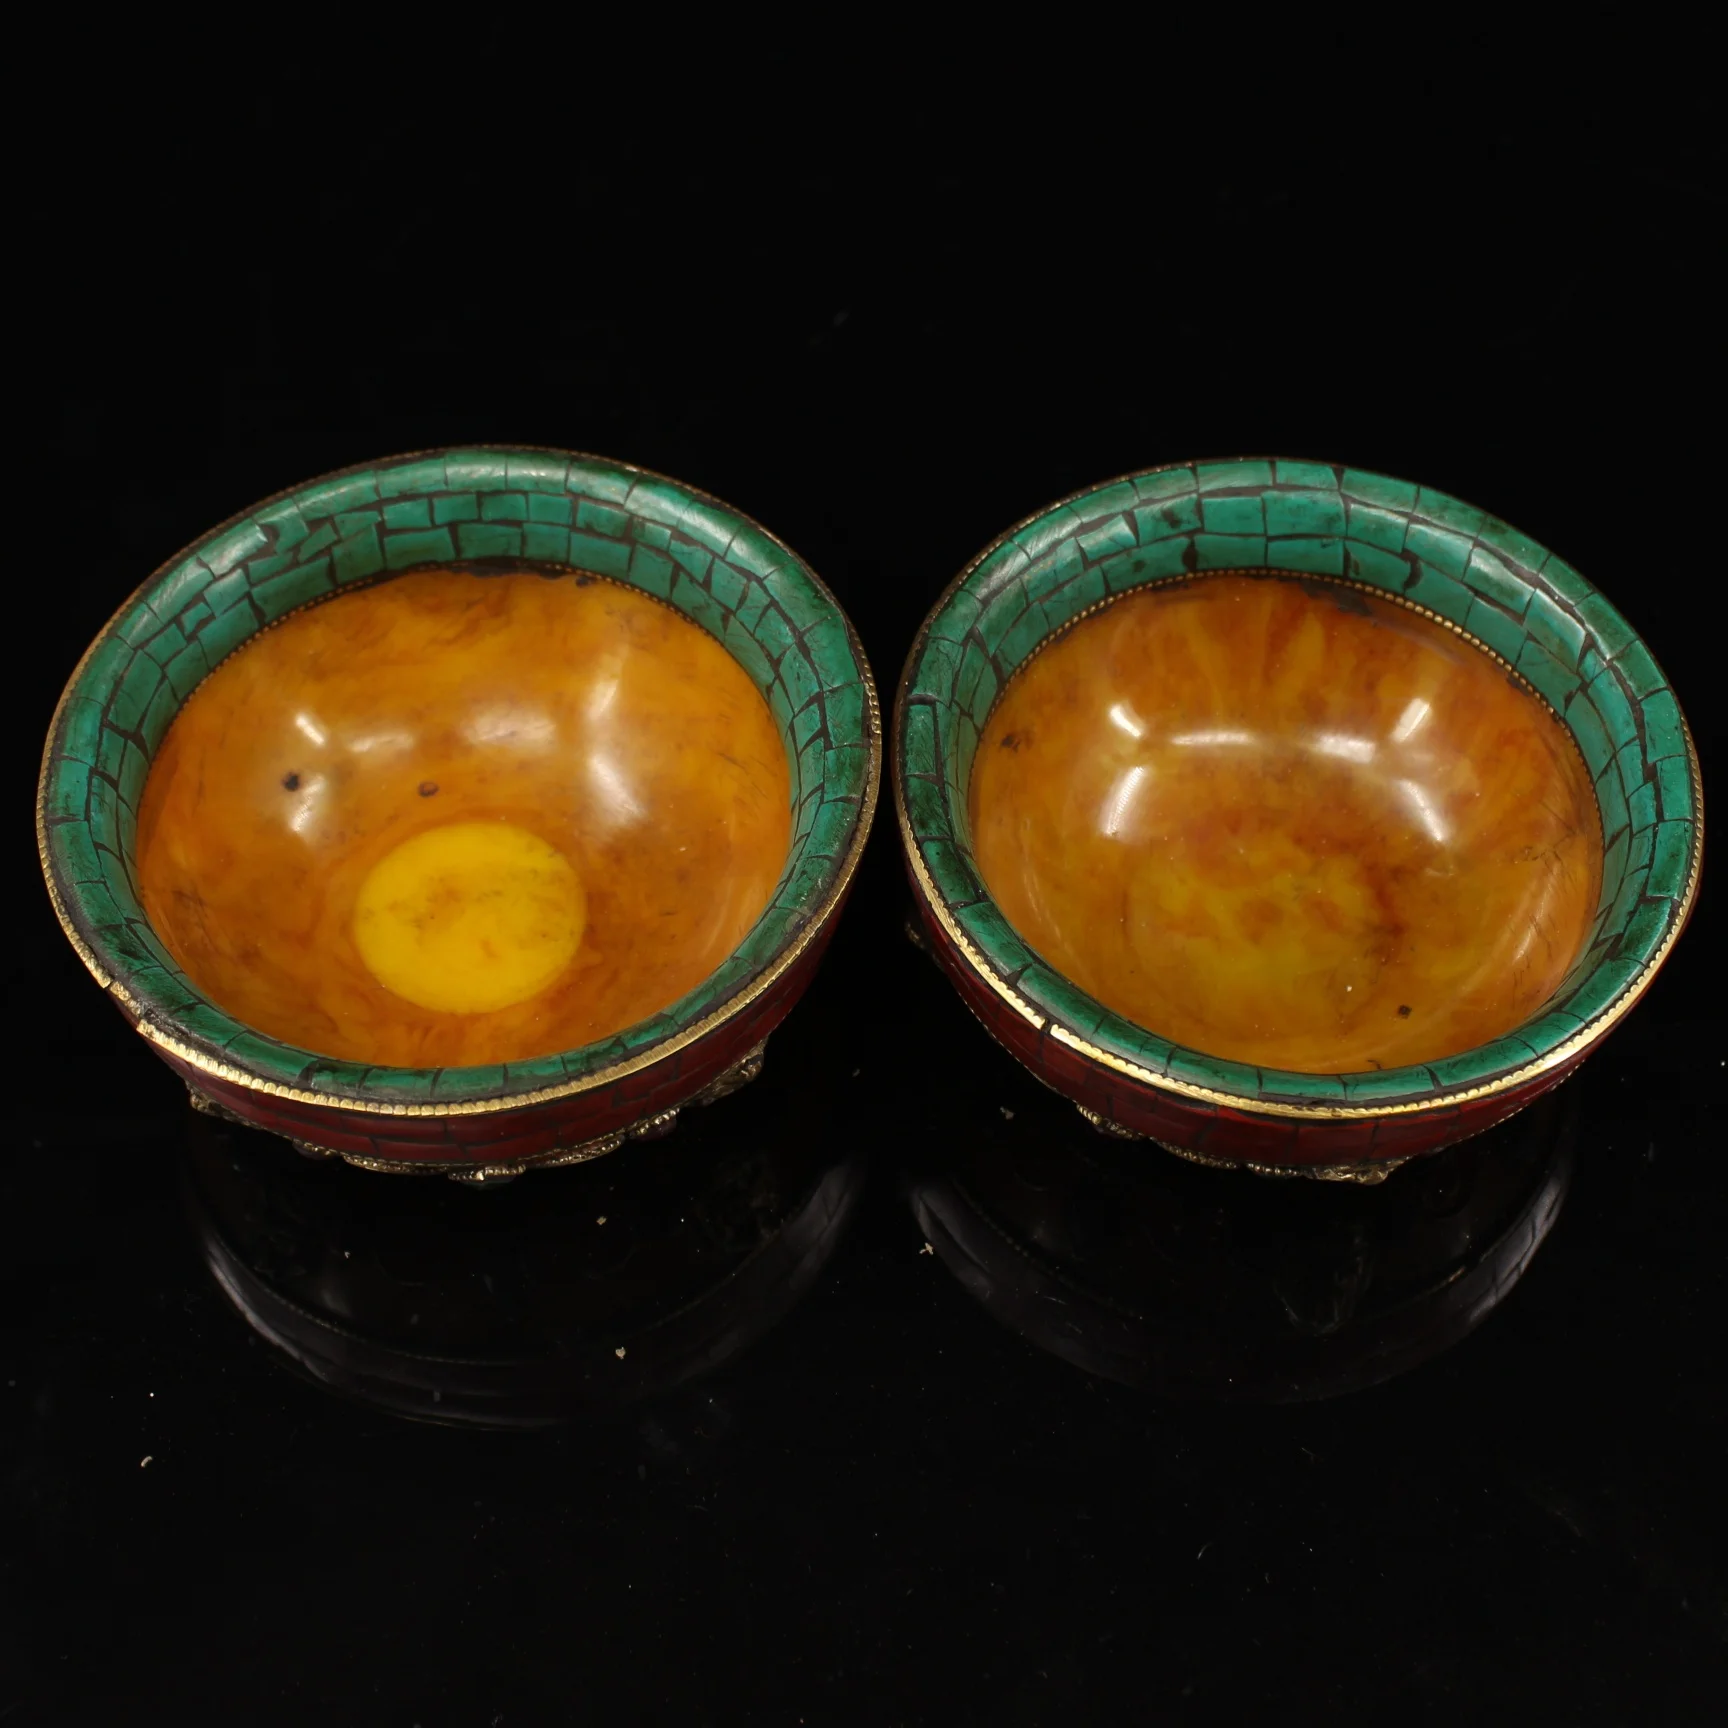 Exquisite imitation ancient beeswax handmade inlaid gemstone filigree ghee bowl ornament